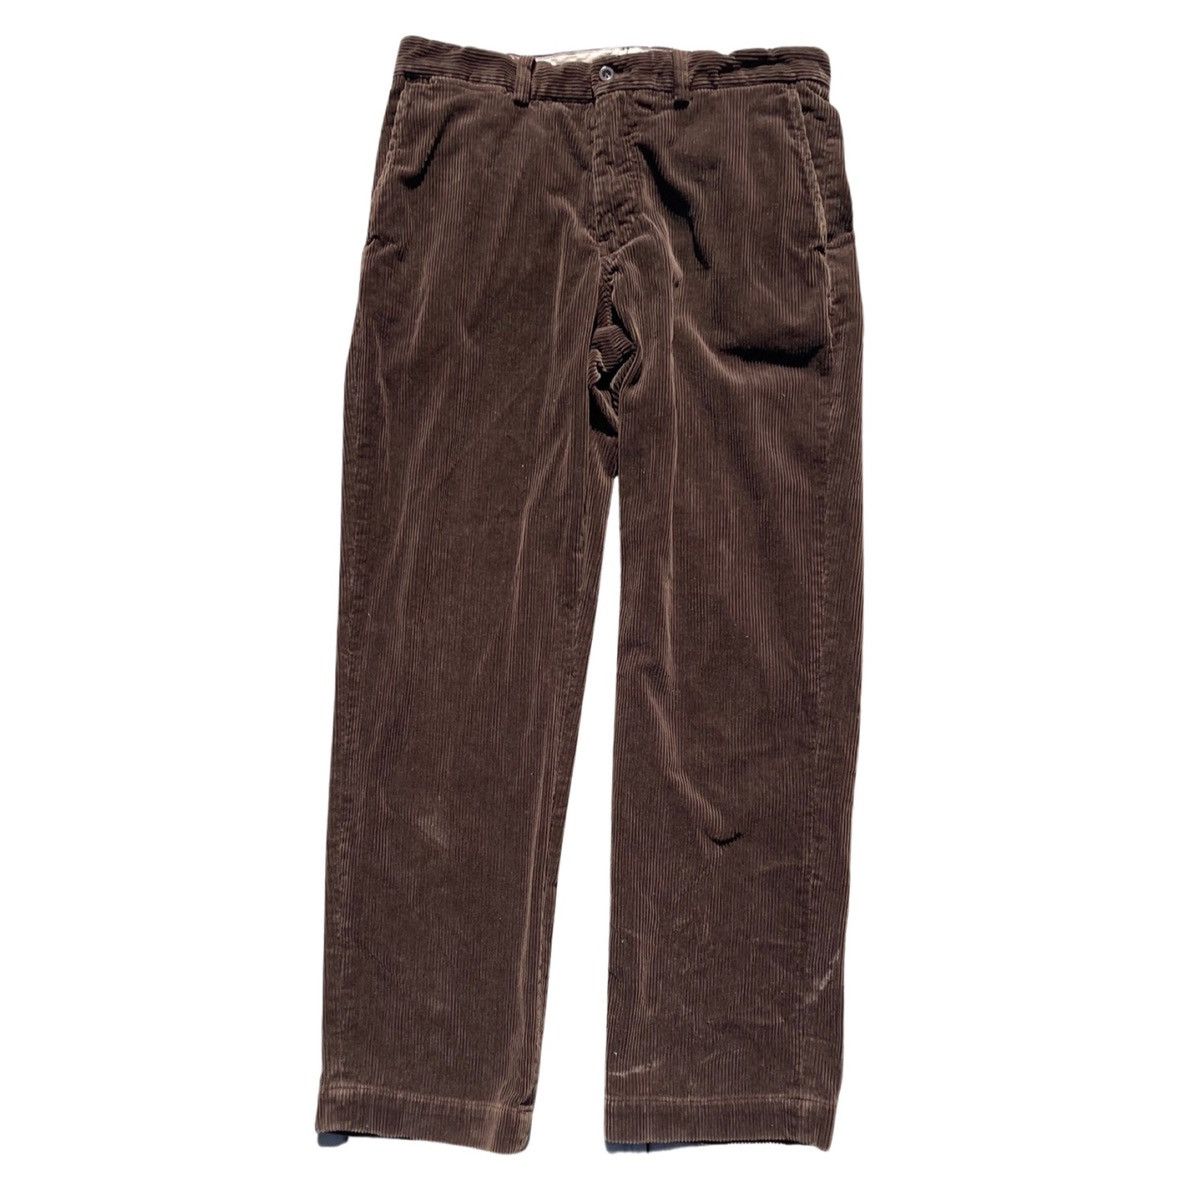 Vintage Dark Brown Corduroy Pants Size US 33 - 1 Preview